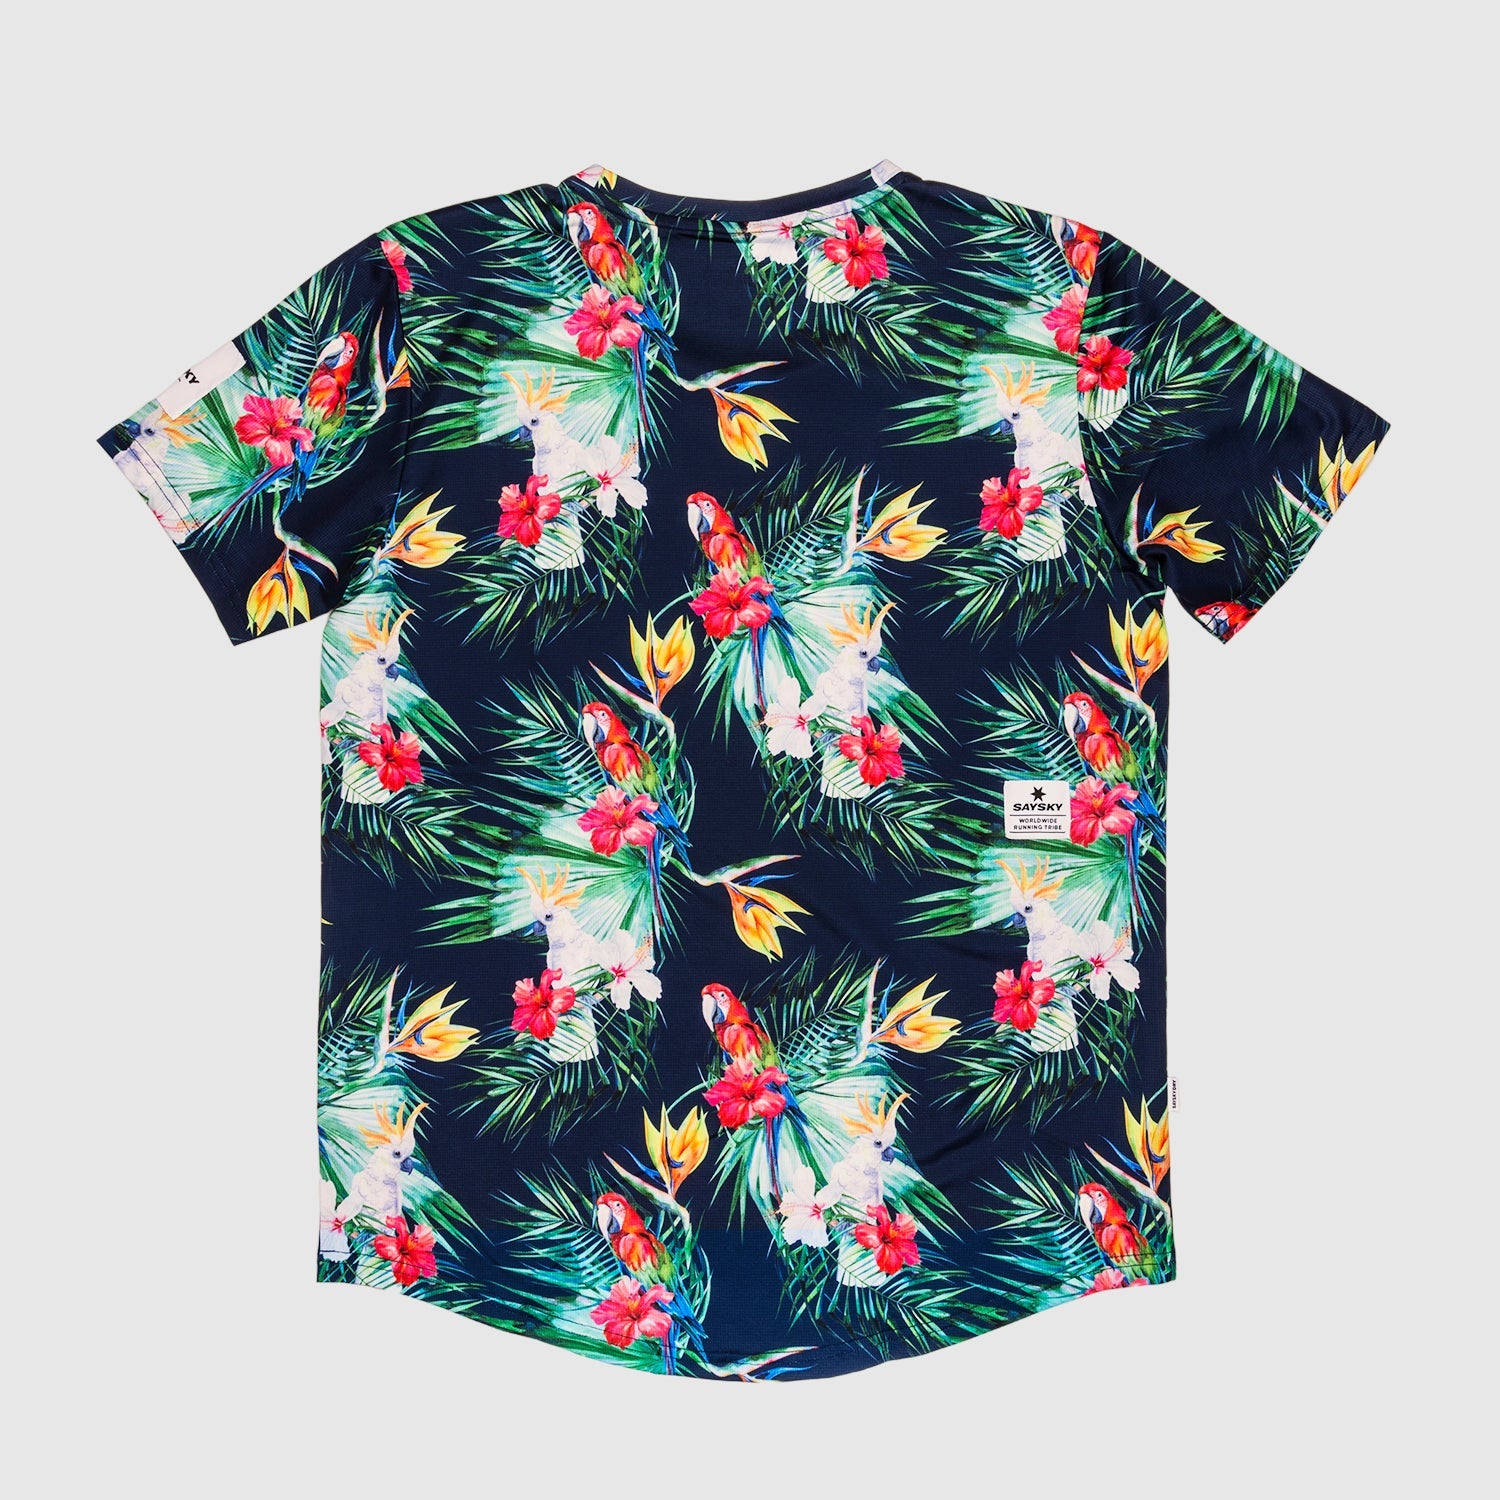 SAYSKY JP - ランニングTシャツ HMRSS15 Floral Combat Tee - Paradise